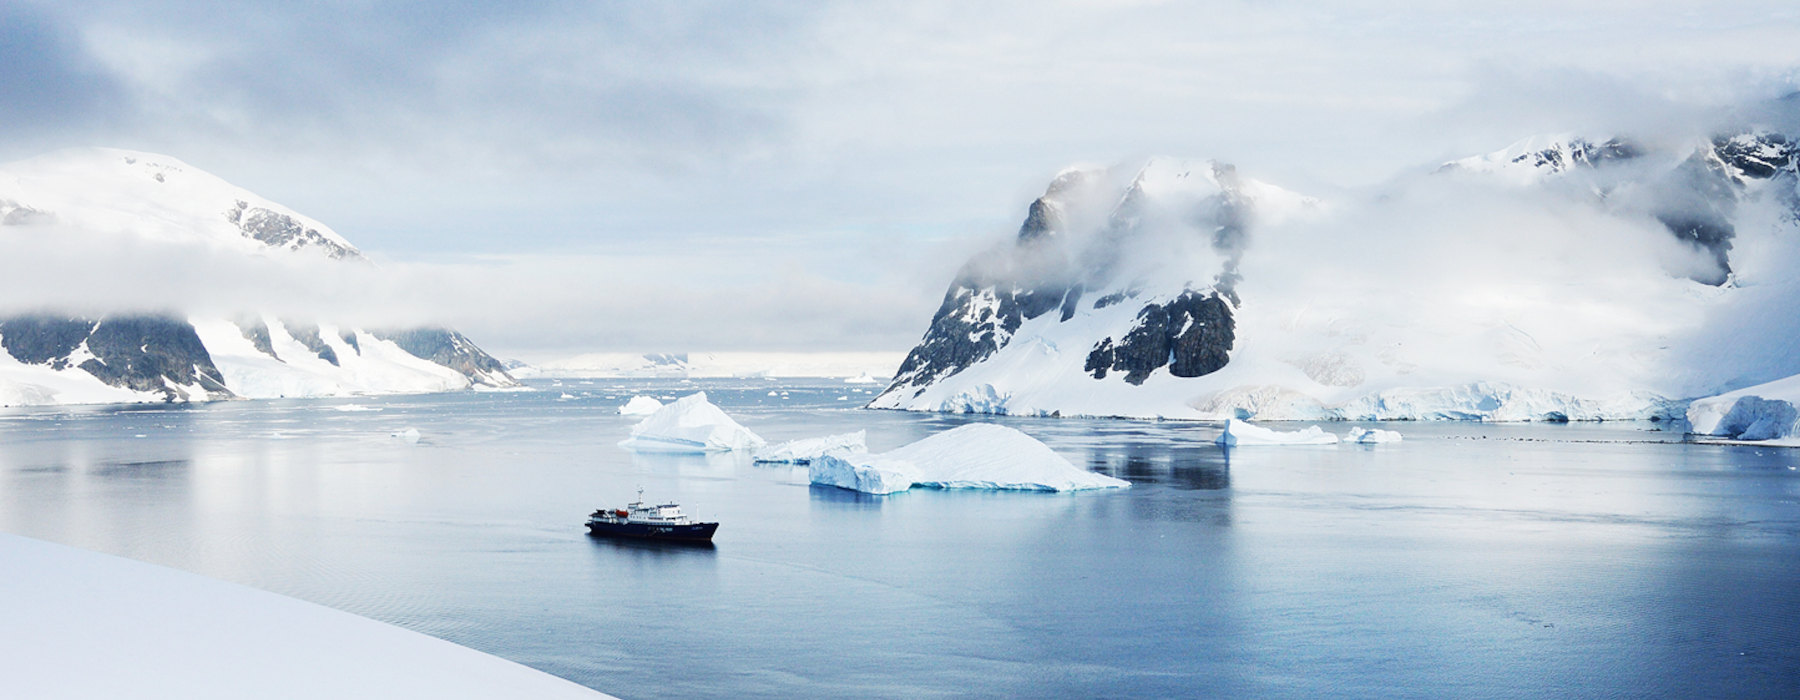 Antarctica<br class="hidden-md hidden-lg" /> Solo Travel